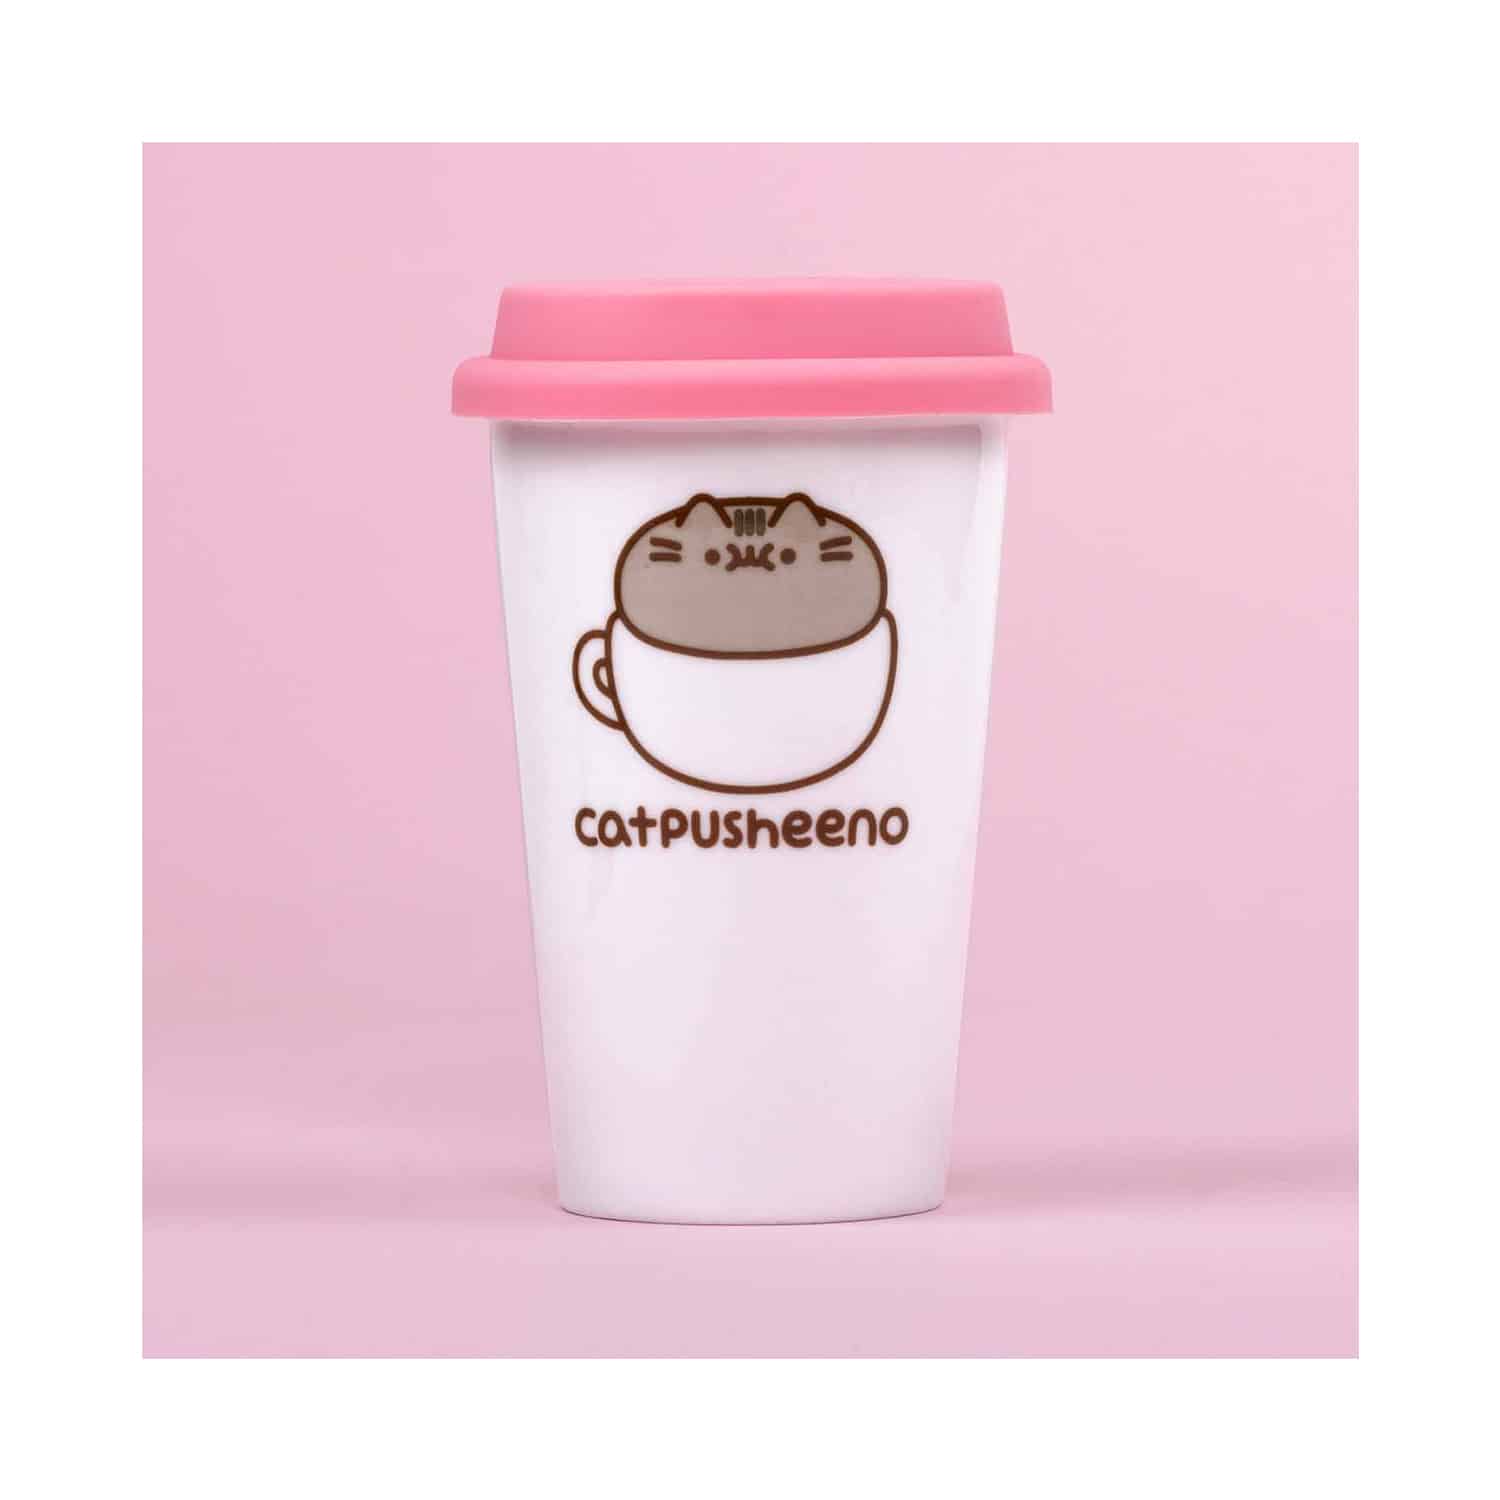 pusheen-catpusheeno-ceramic-travel-mug